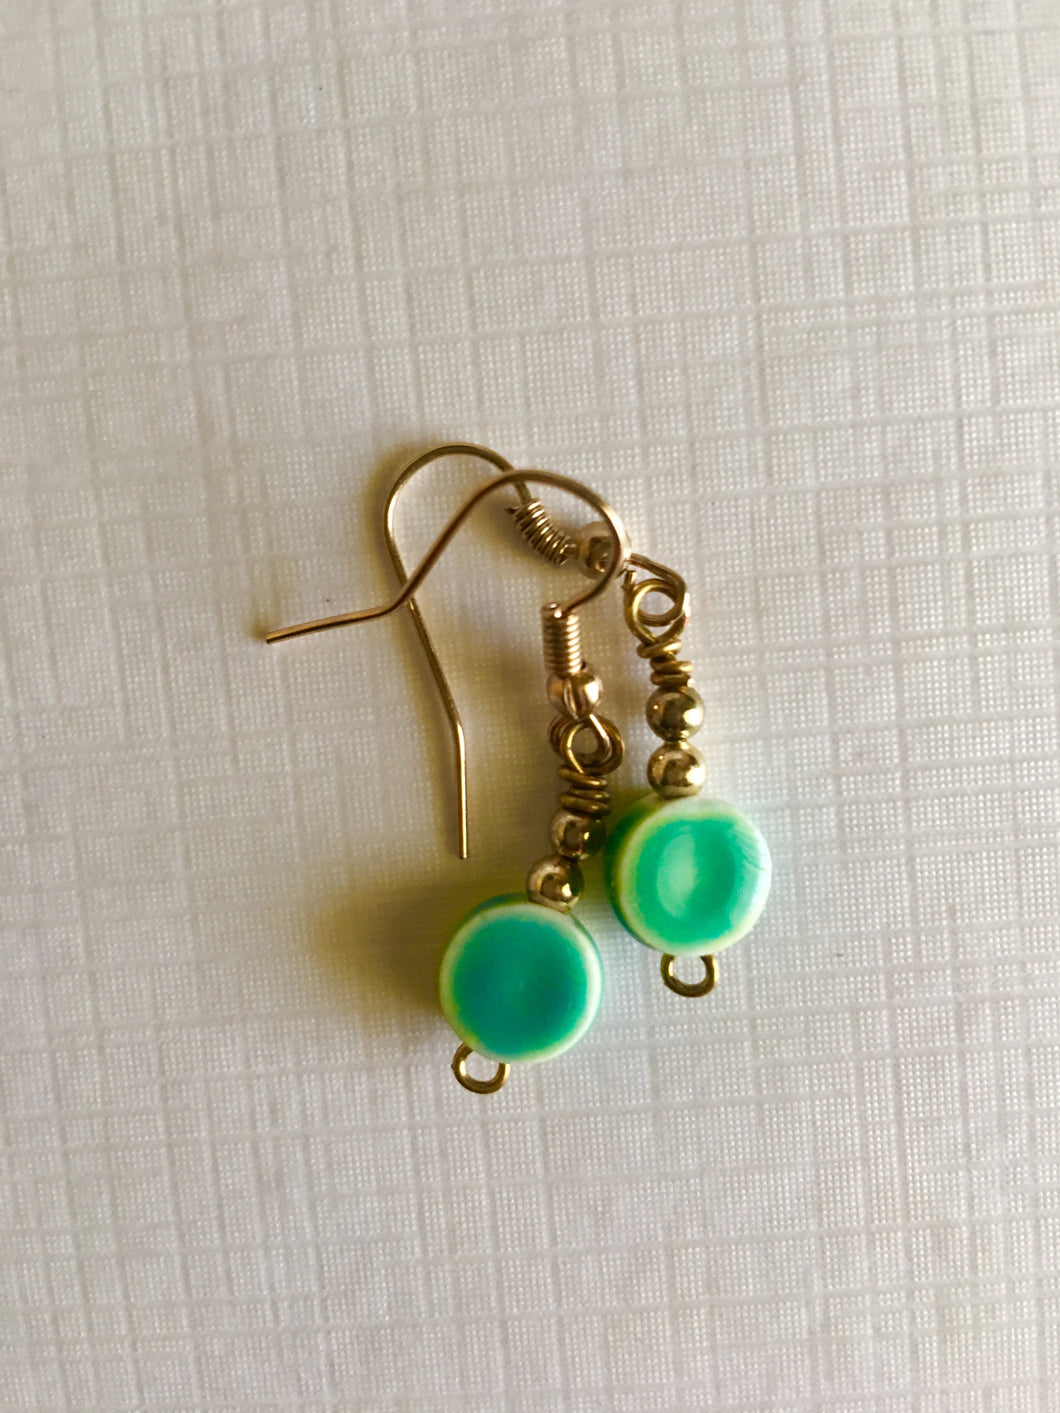 A Green glass bead